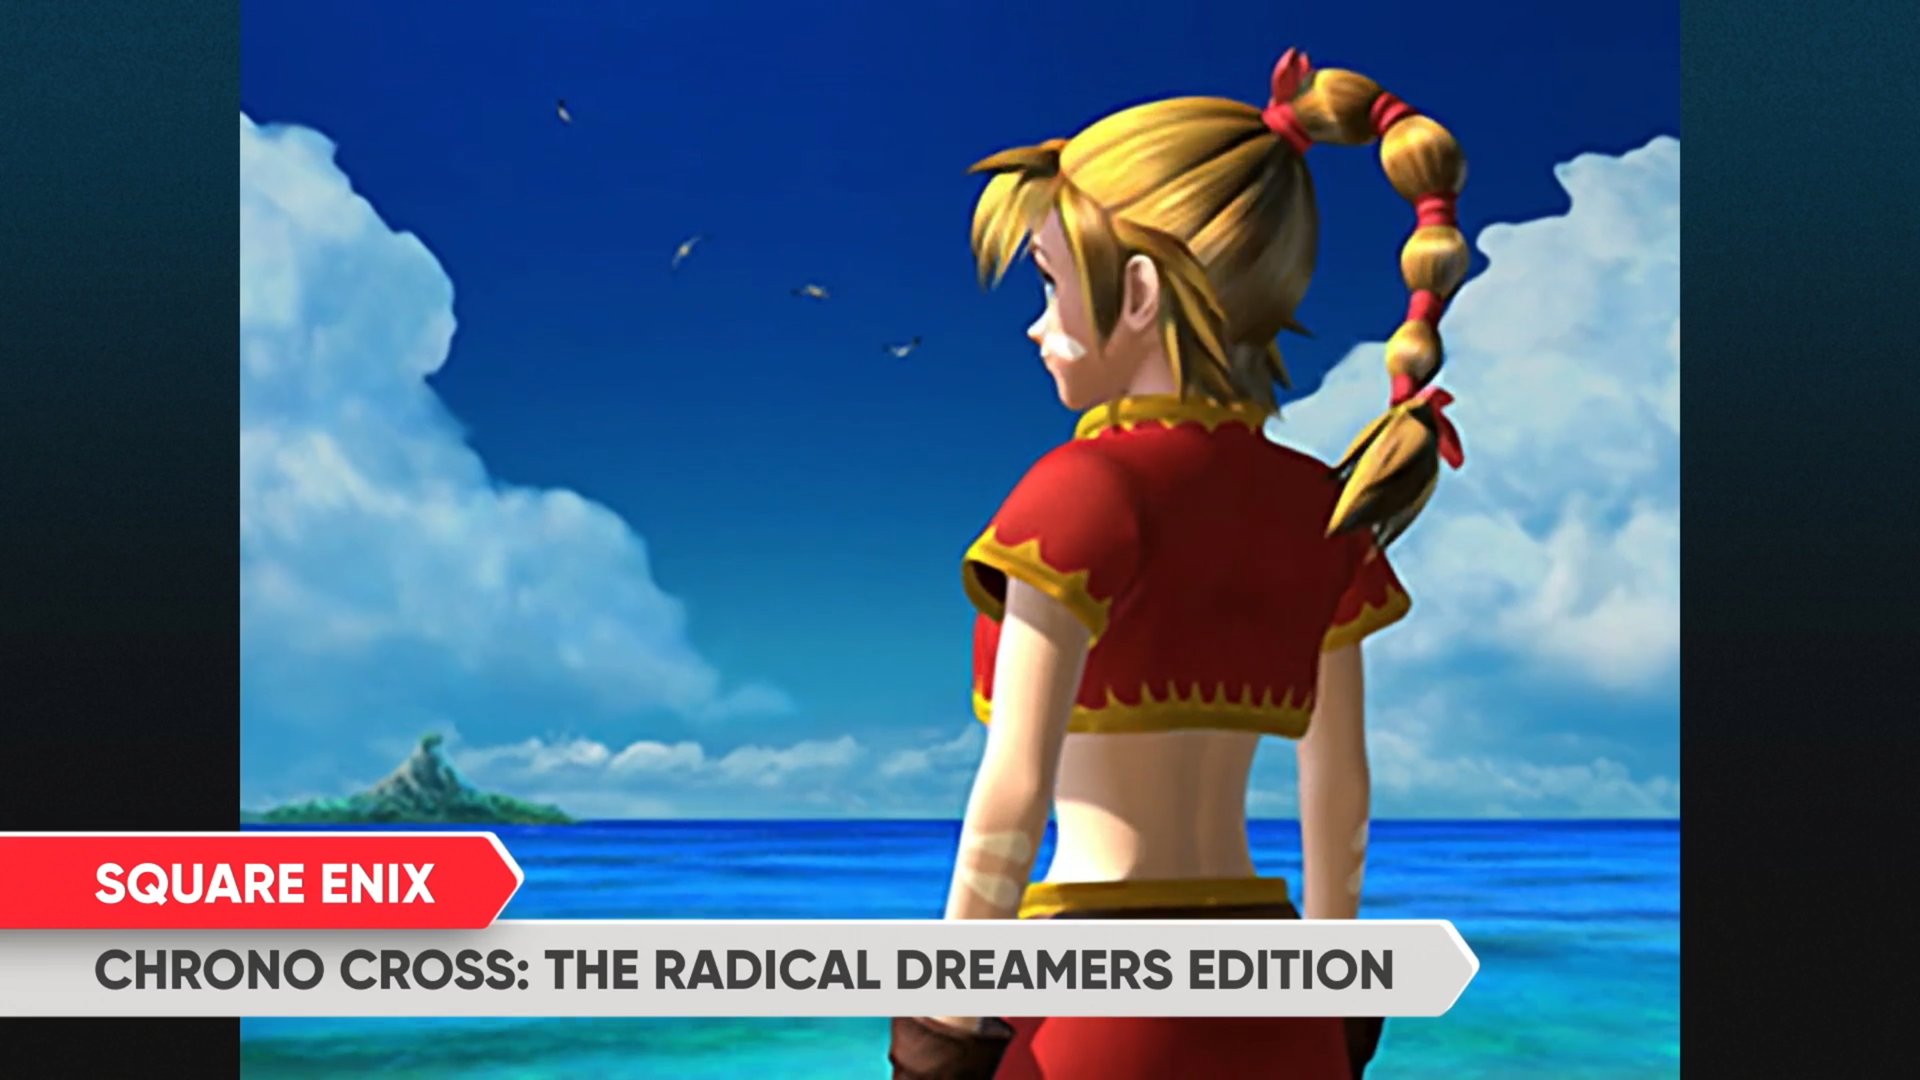 Square Enix announces Chrono Cross: The Radical Dreamers Edition